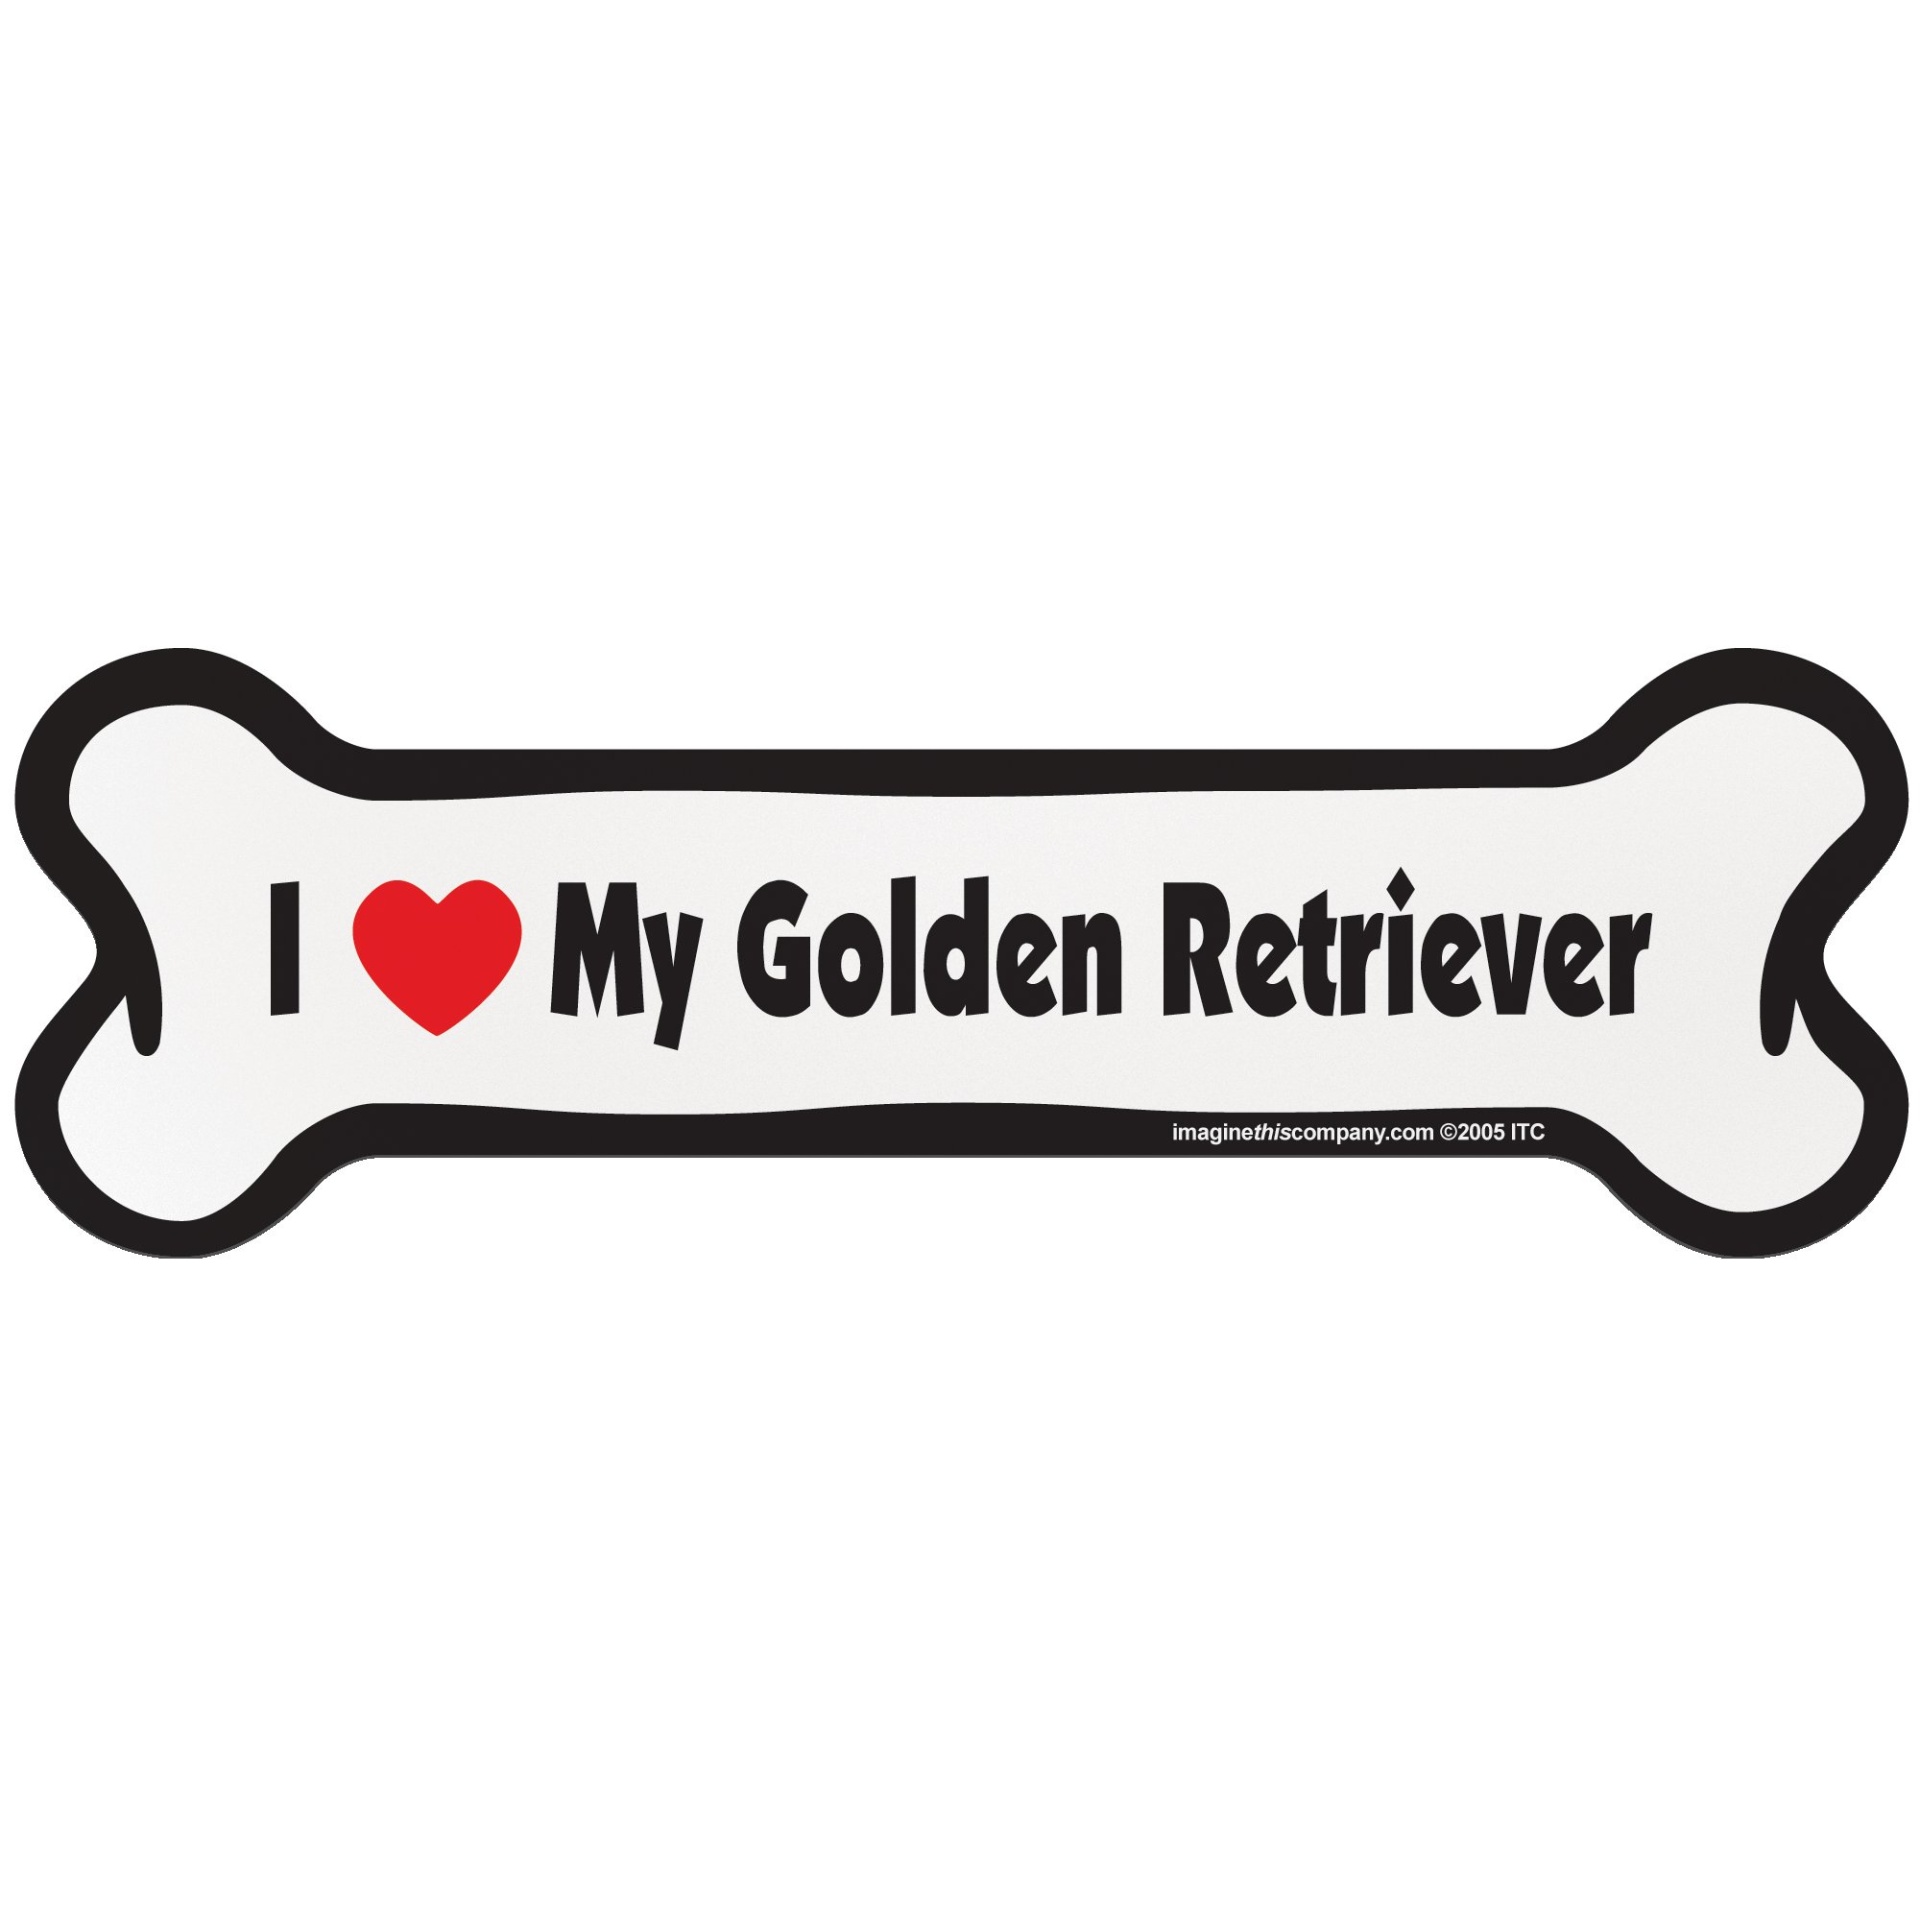 slide 1 of 1, Imagine This "I Love My Golden Retriever" Bone Car Magnet, SM